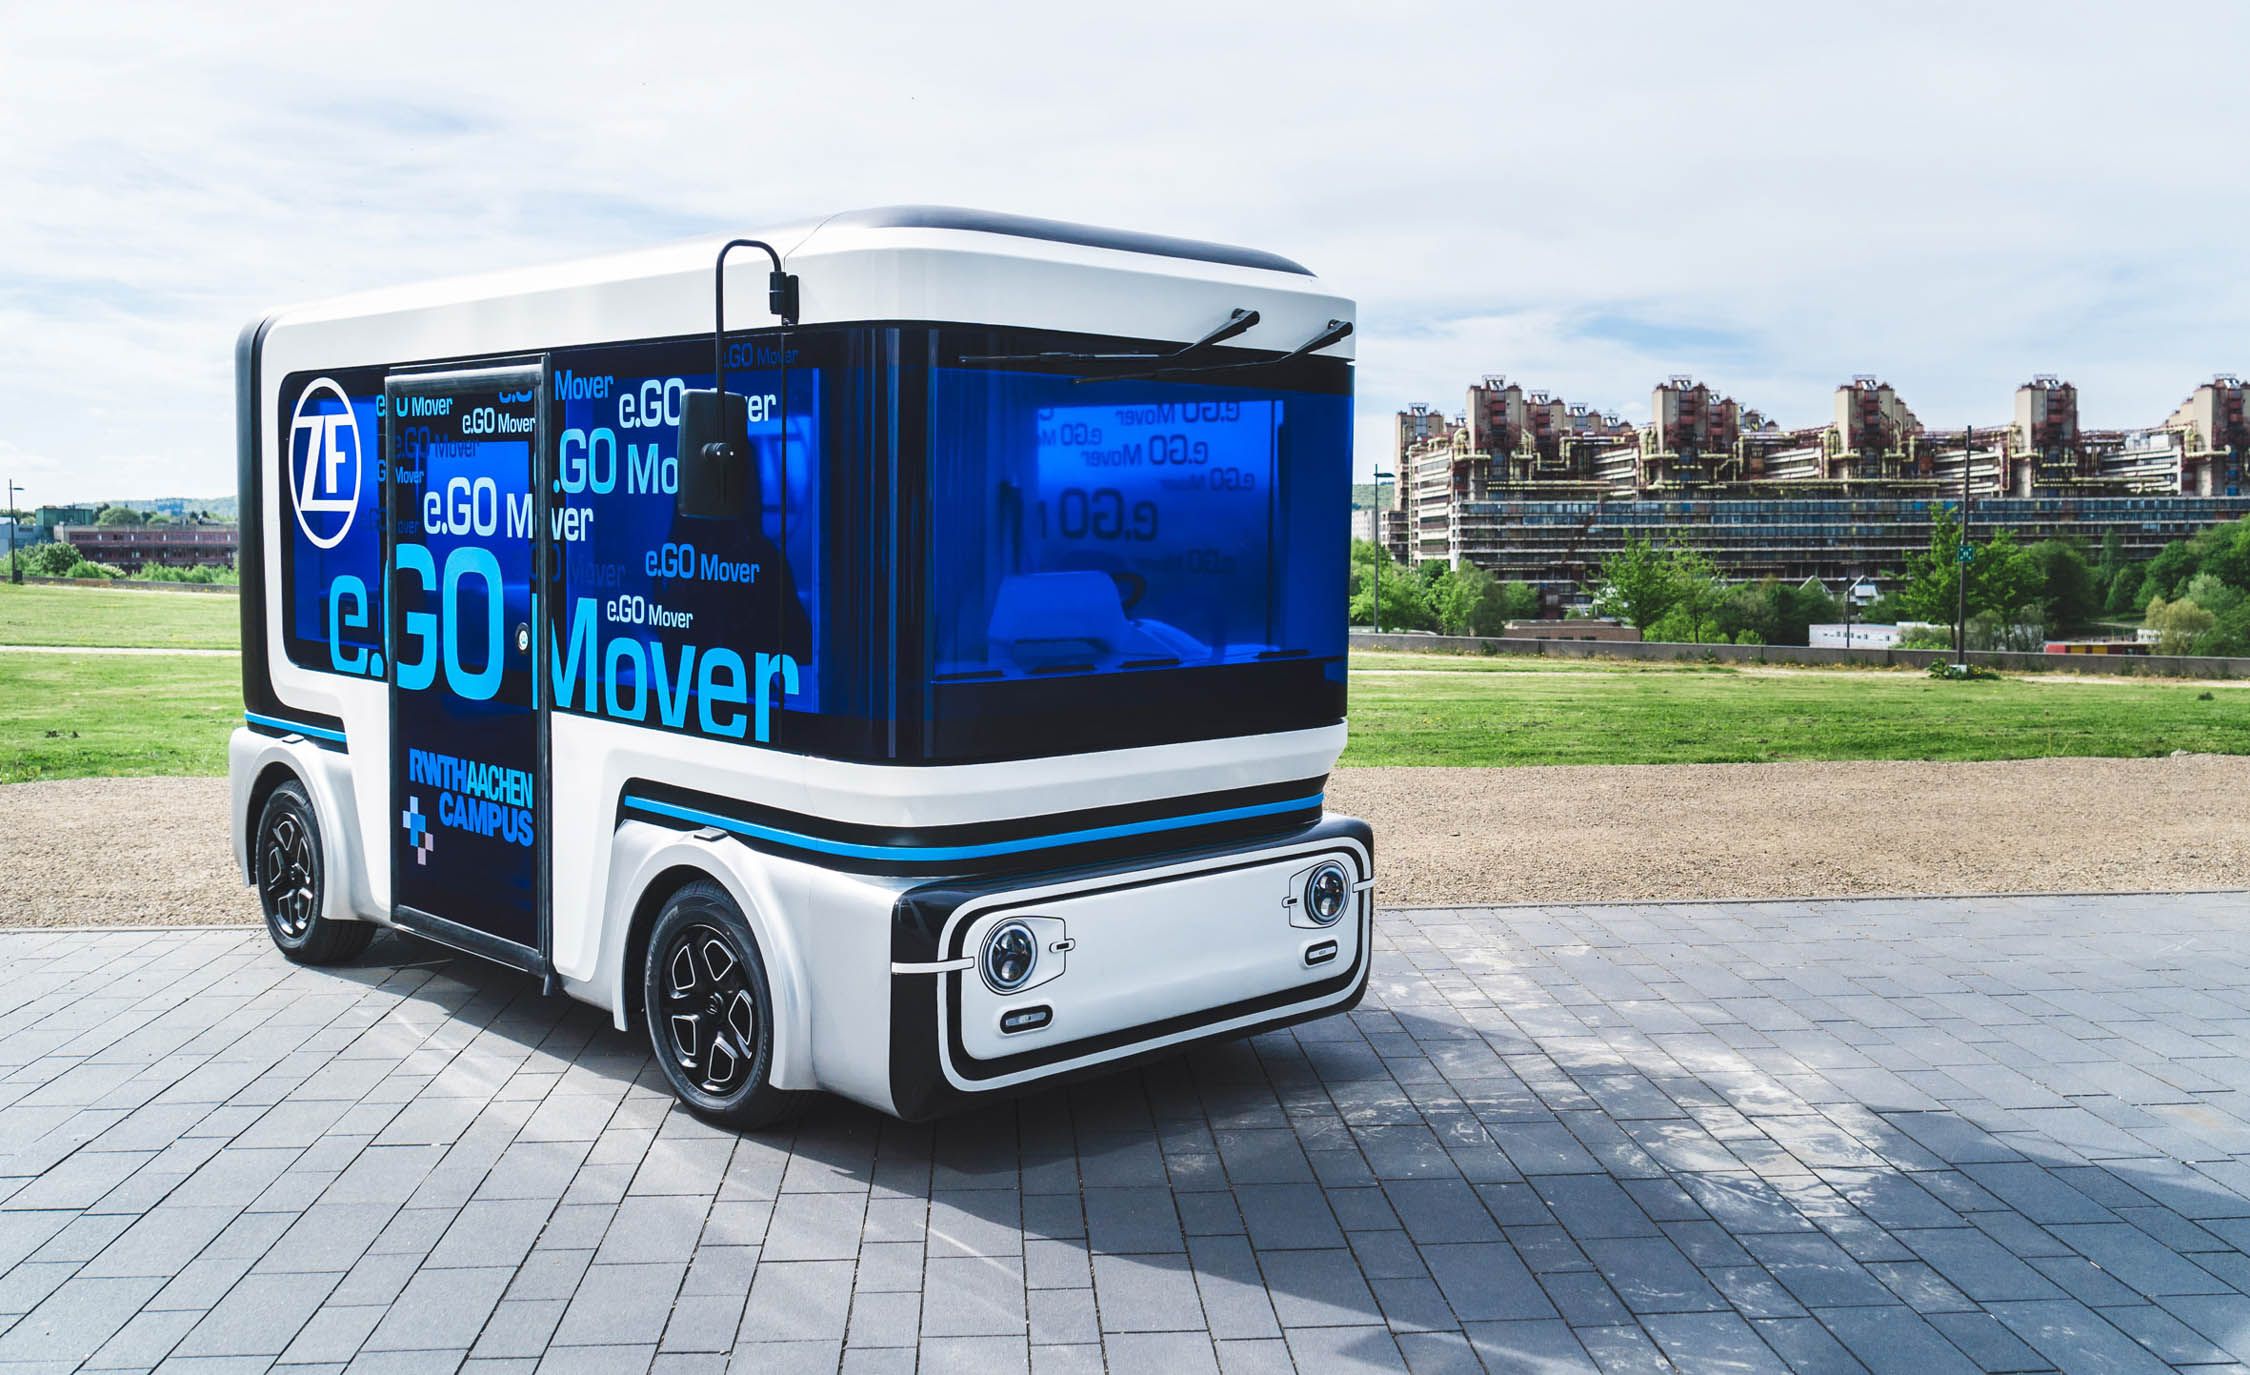 The E Go Mover Autonomous Electric Minibus Coming In 19 News Car And Driver